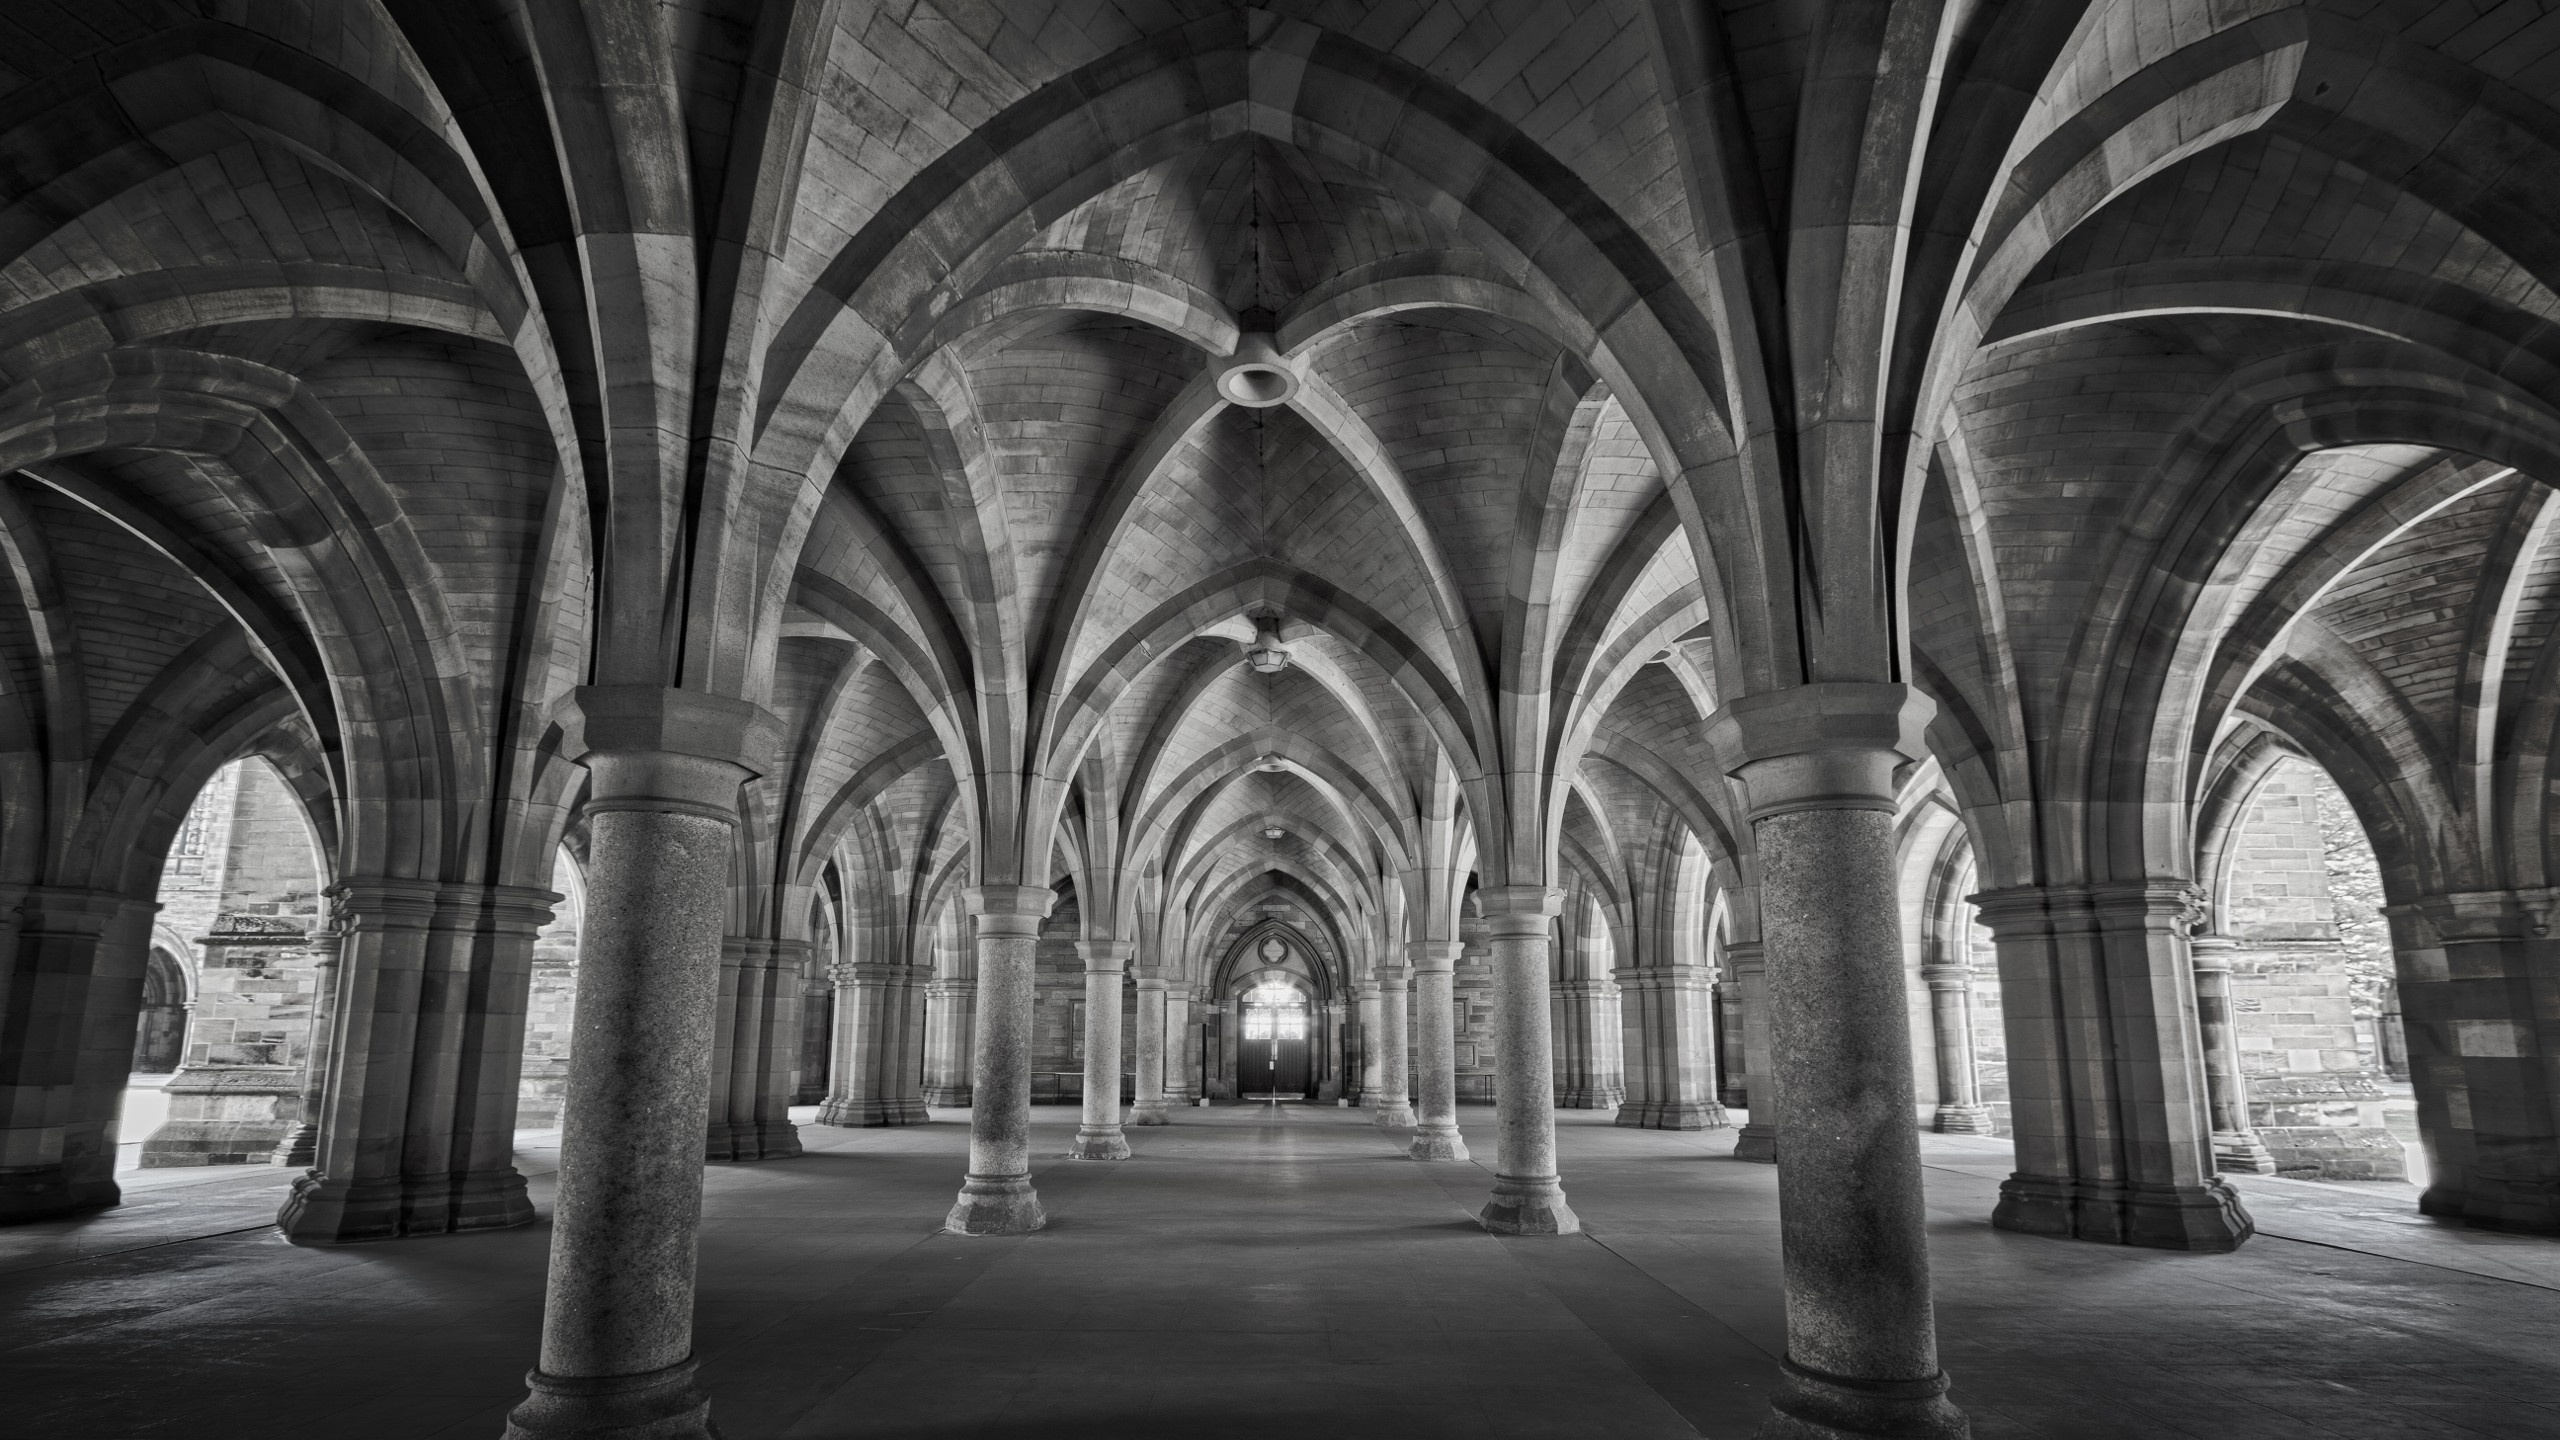 Gothic Architecture: Building, Scotland, Symmetry, Columns, Arches, Pillars, UK, Arcades, Cathedral, Monastery, University of Glasgow, Abbey, Monochrome. 2560x1440 HD Background.